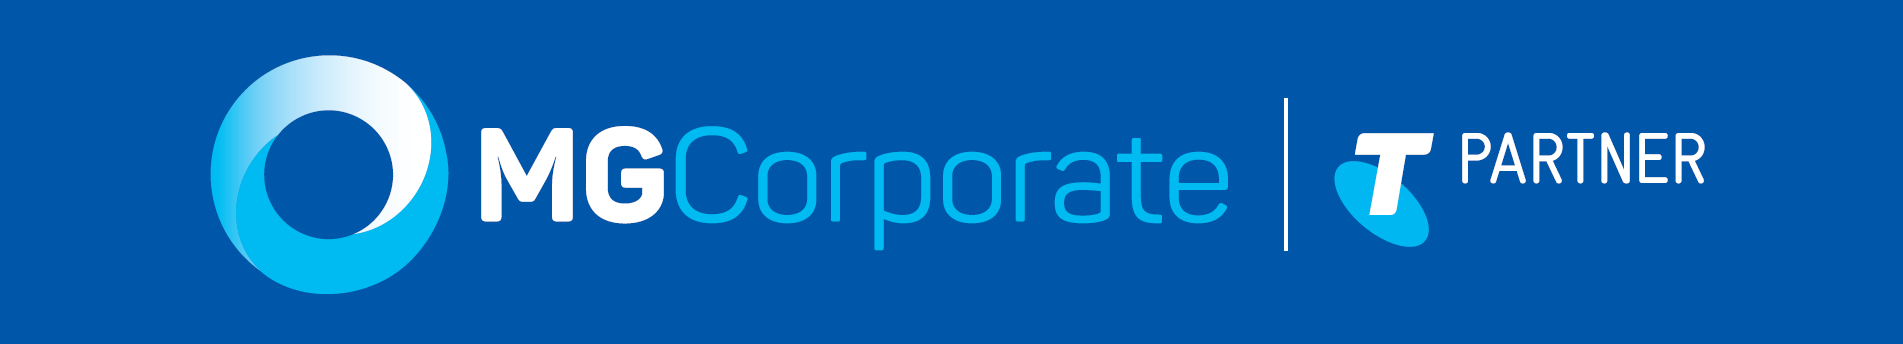 MG Corporate Logo Banner